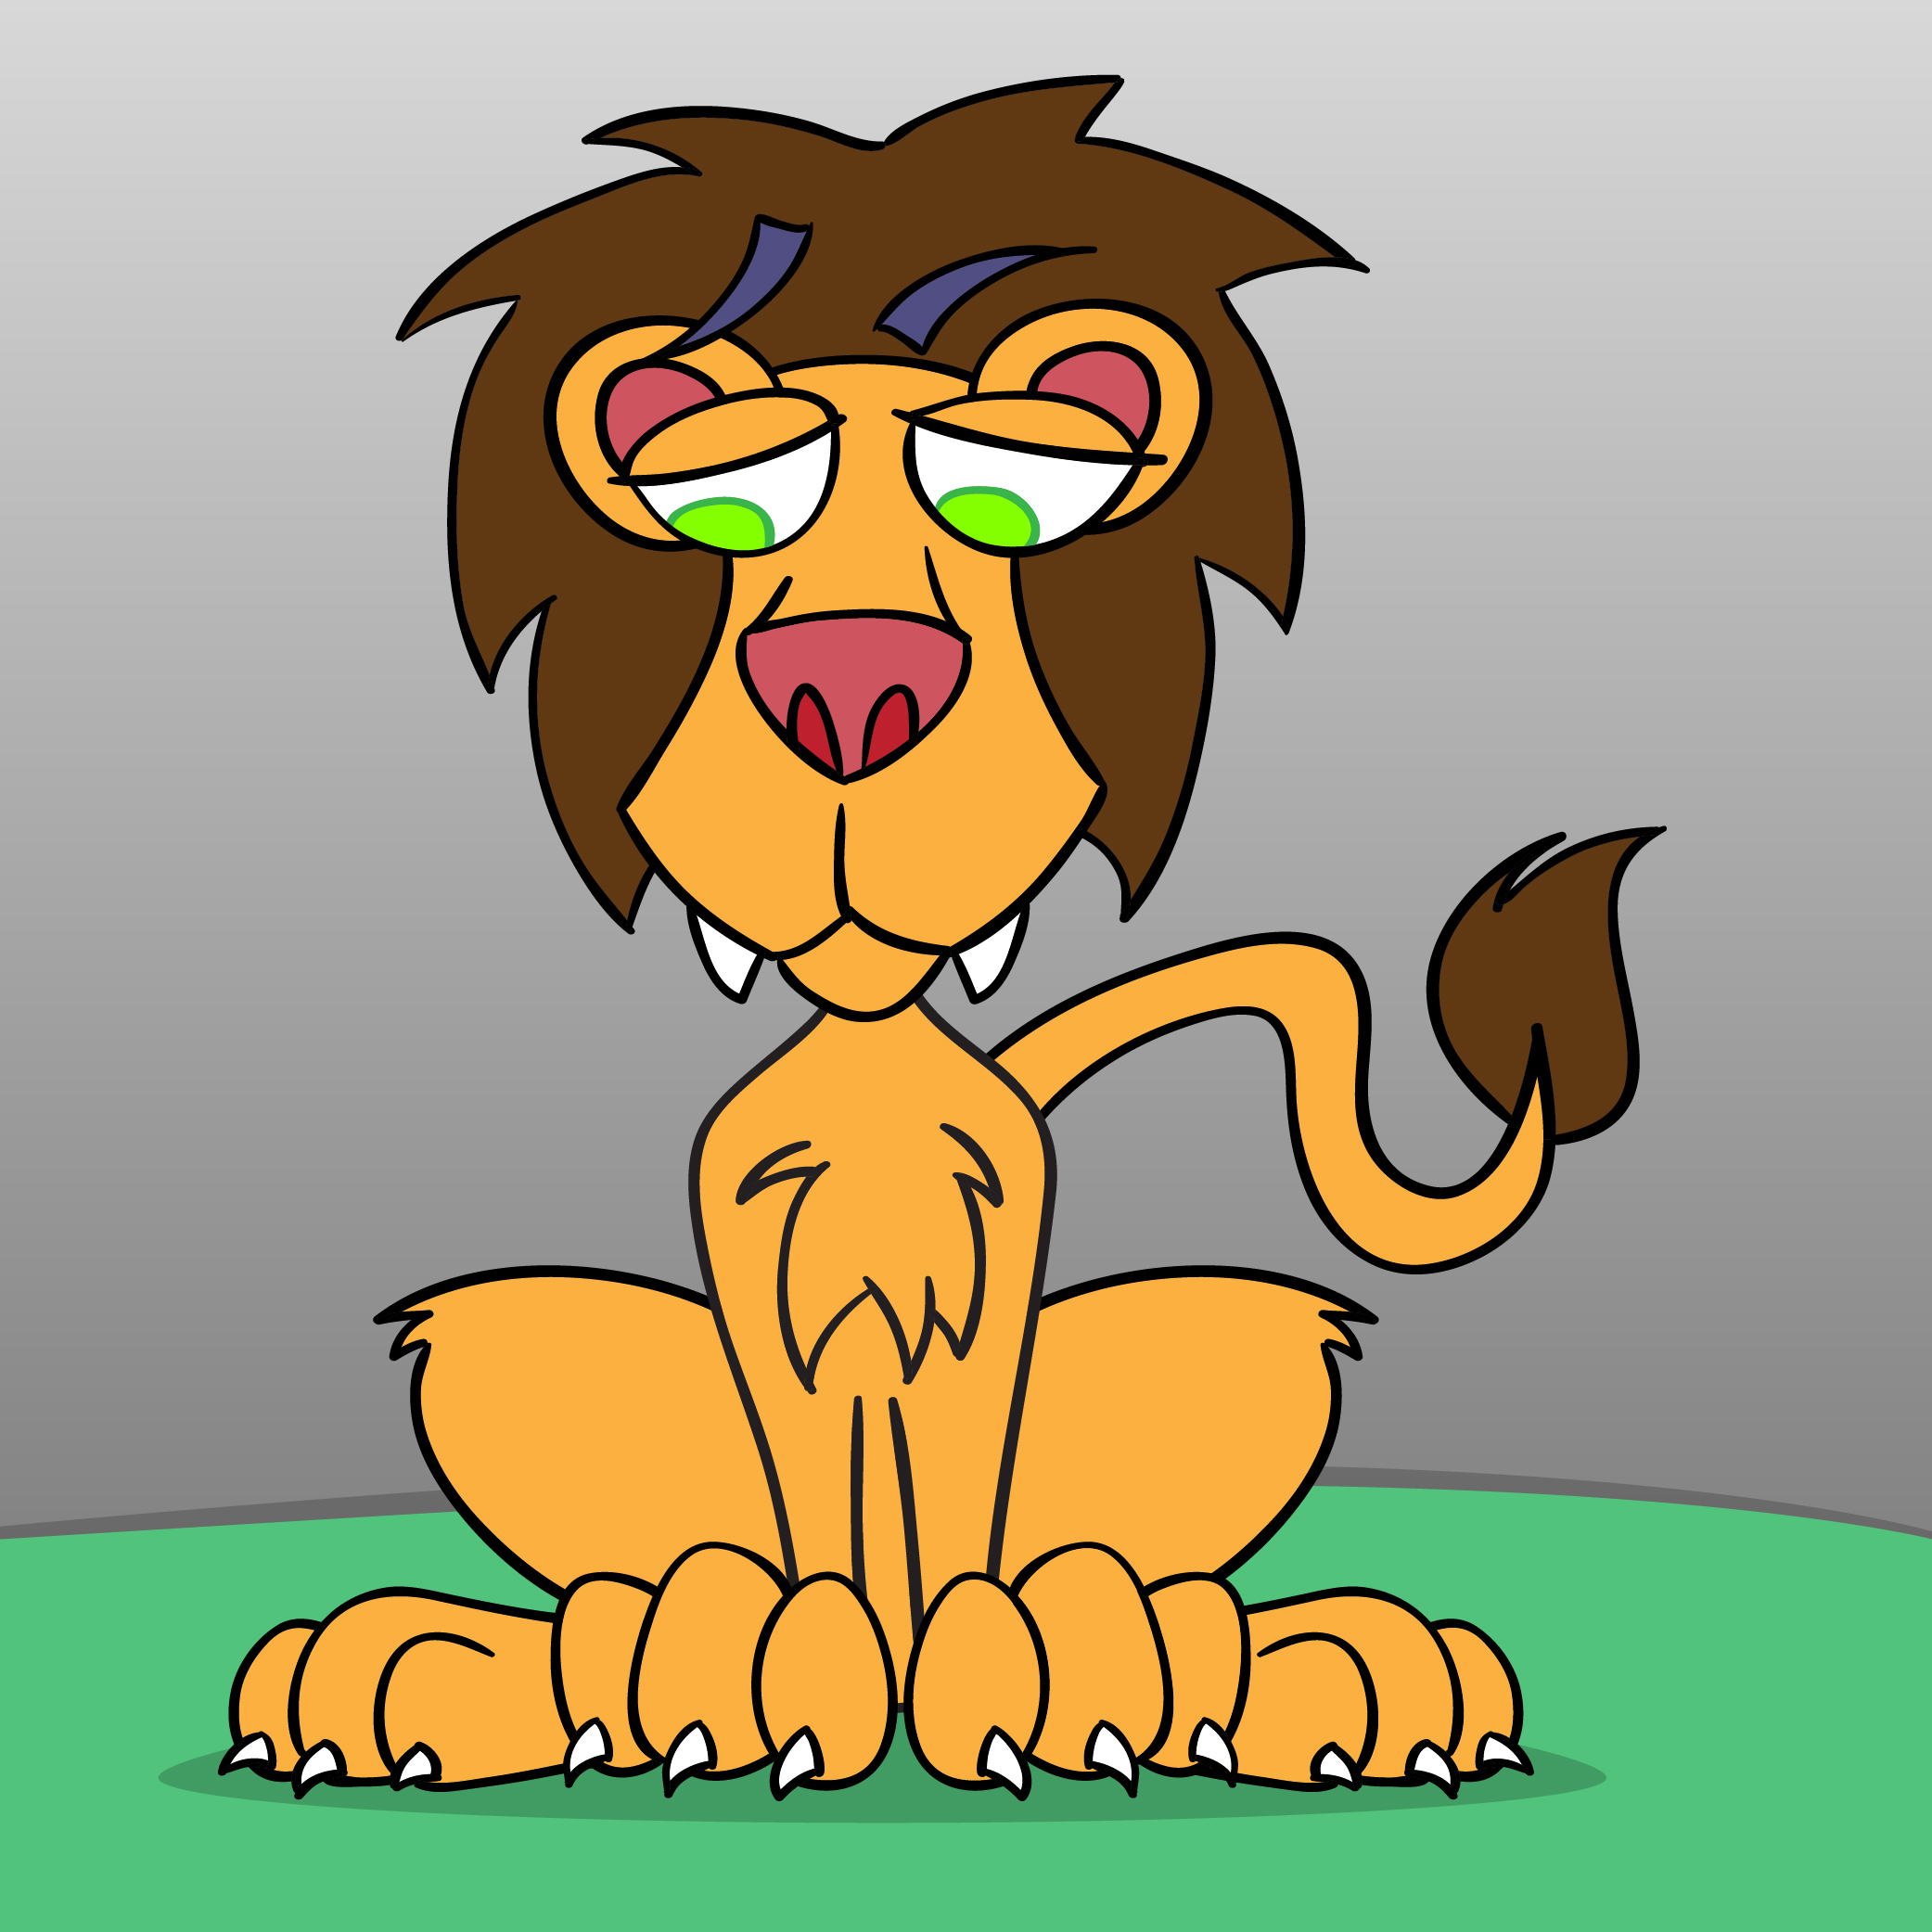 Cartoon Lion   Vector Illustration Of A Cute Cartoon Lion Looking